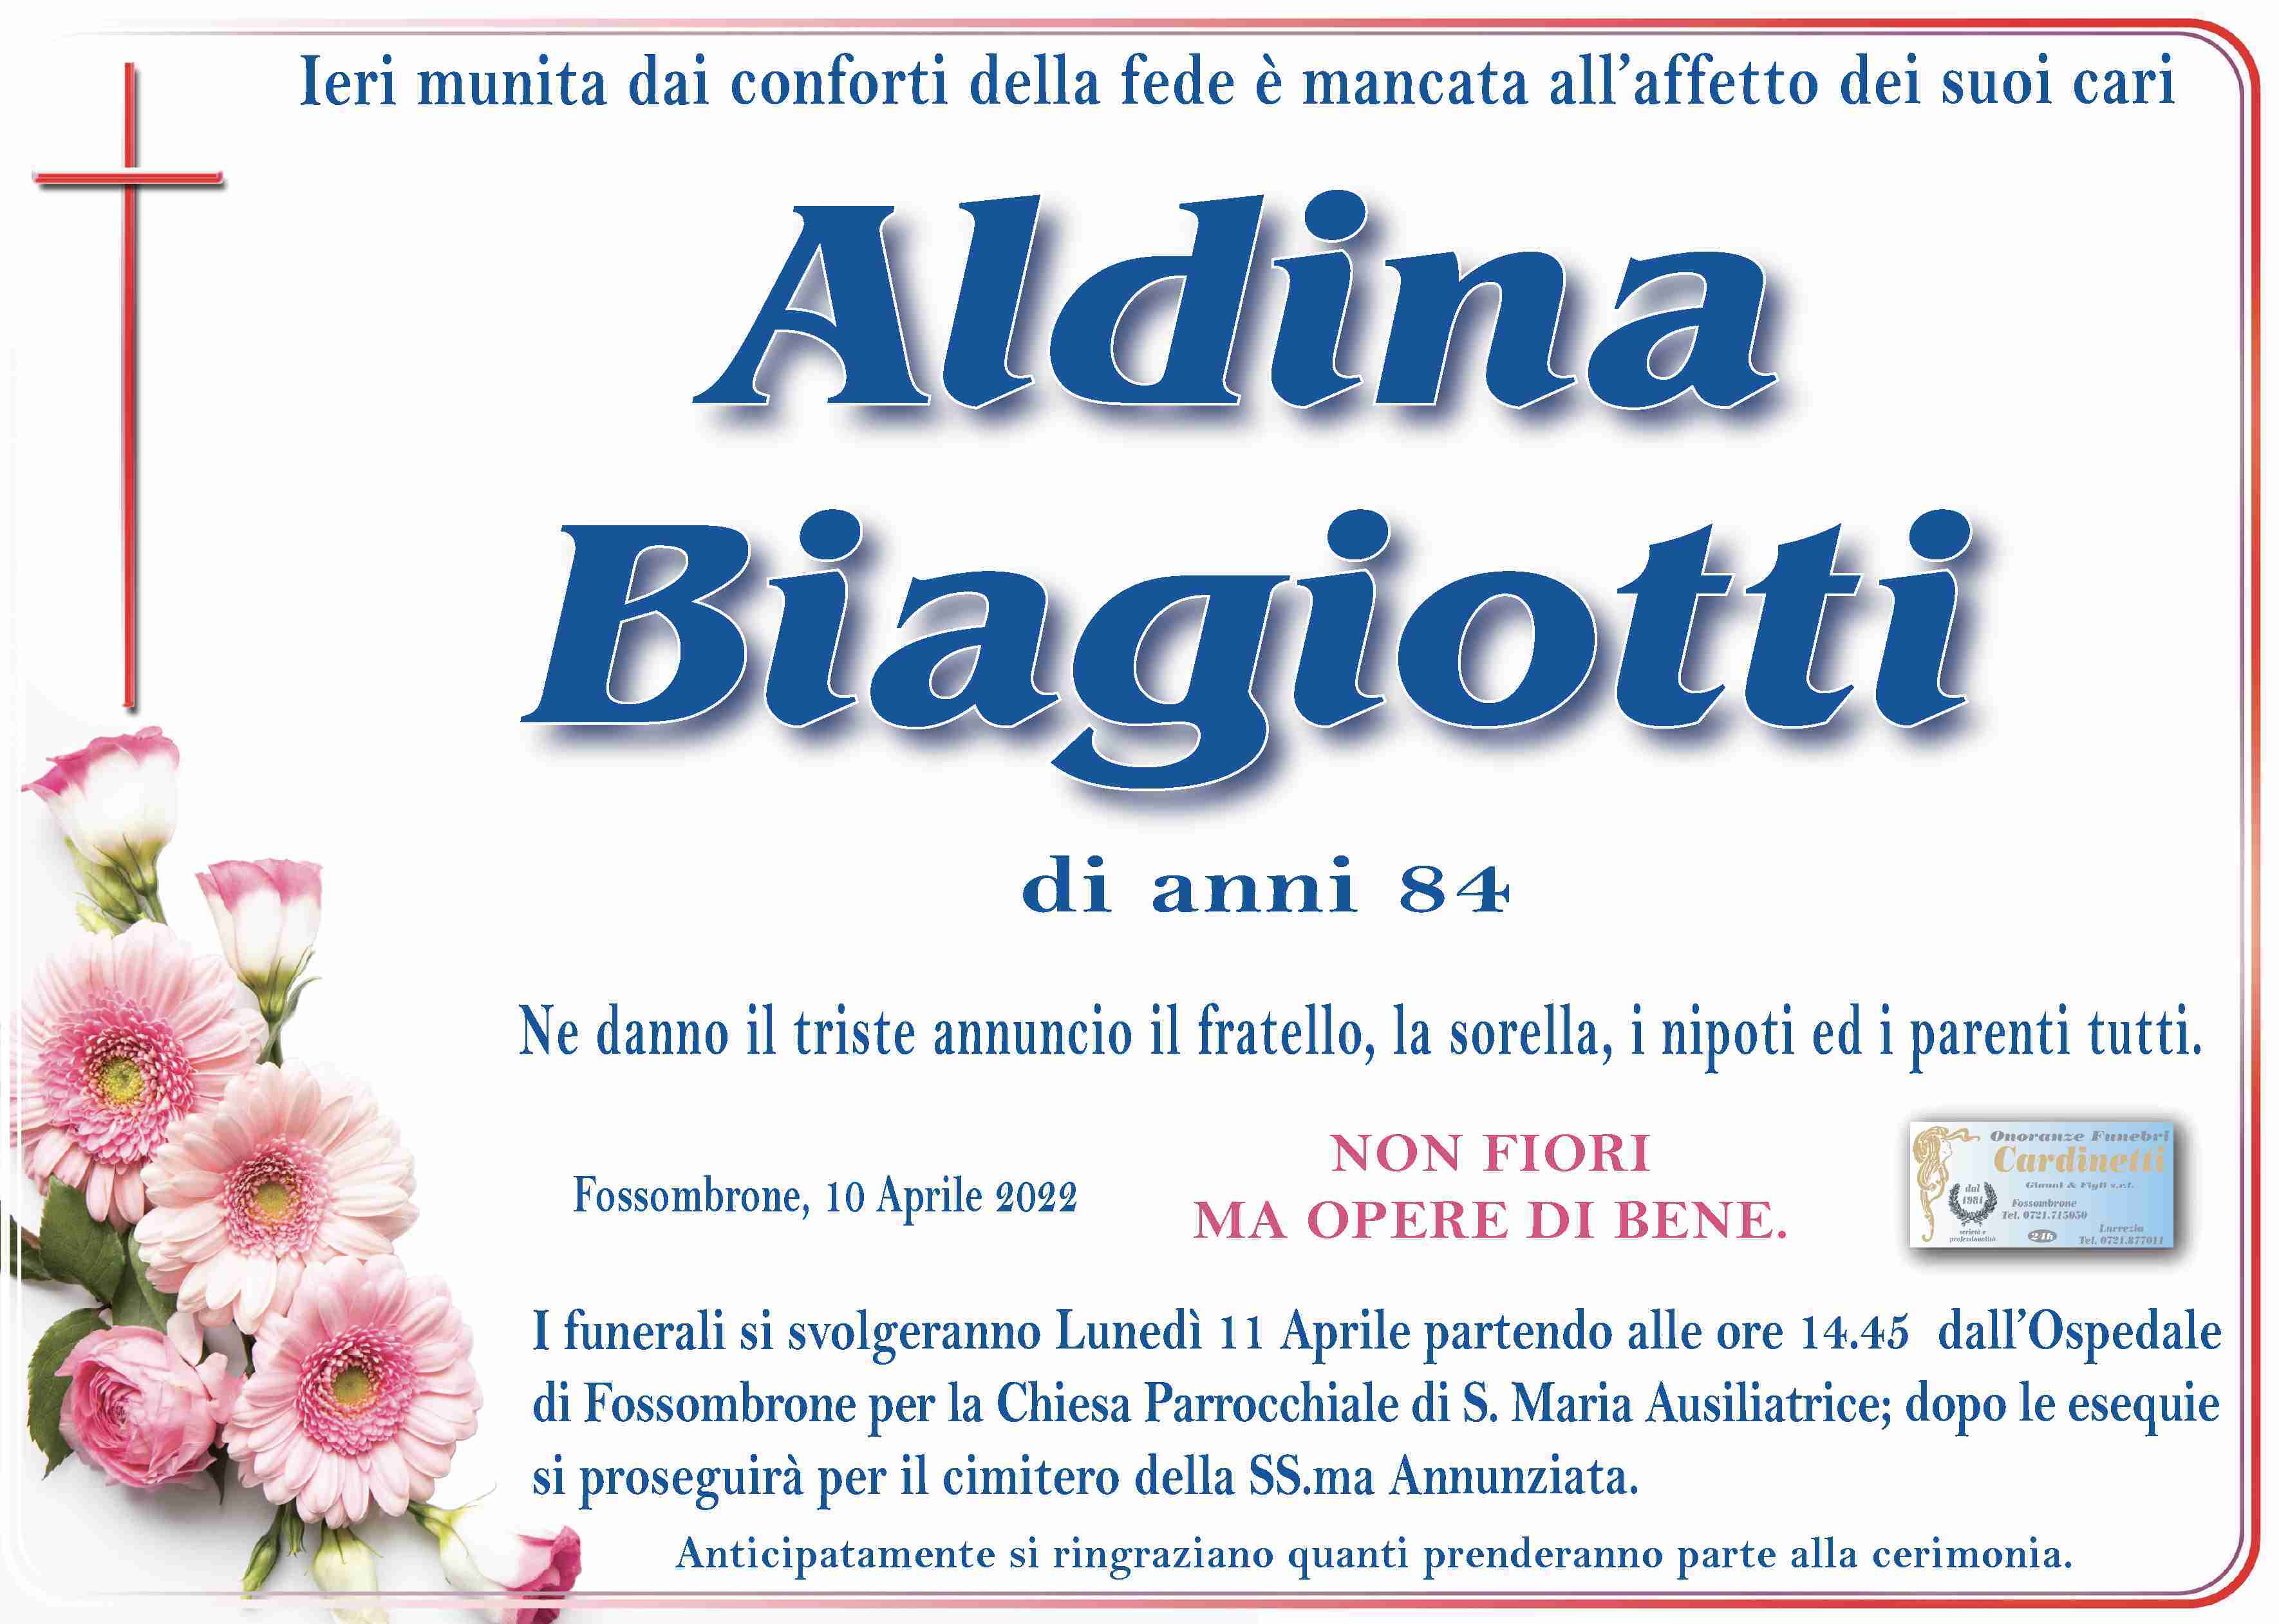 Aldina Biagiotti